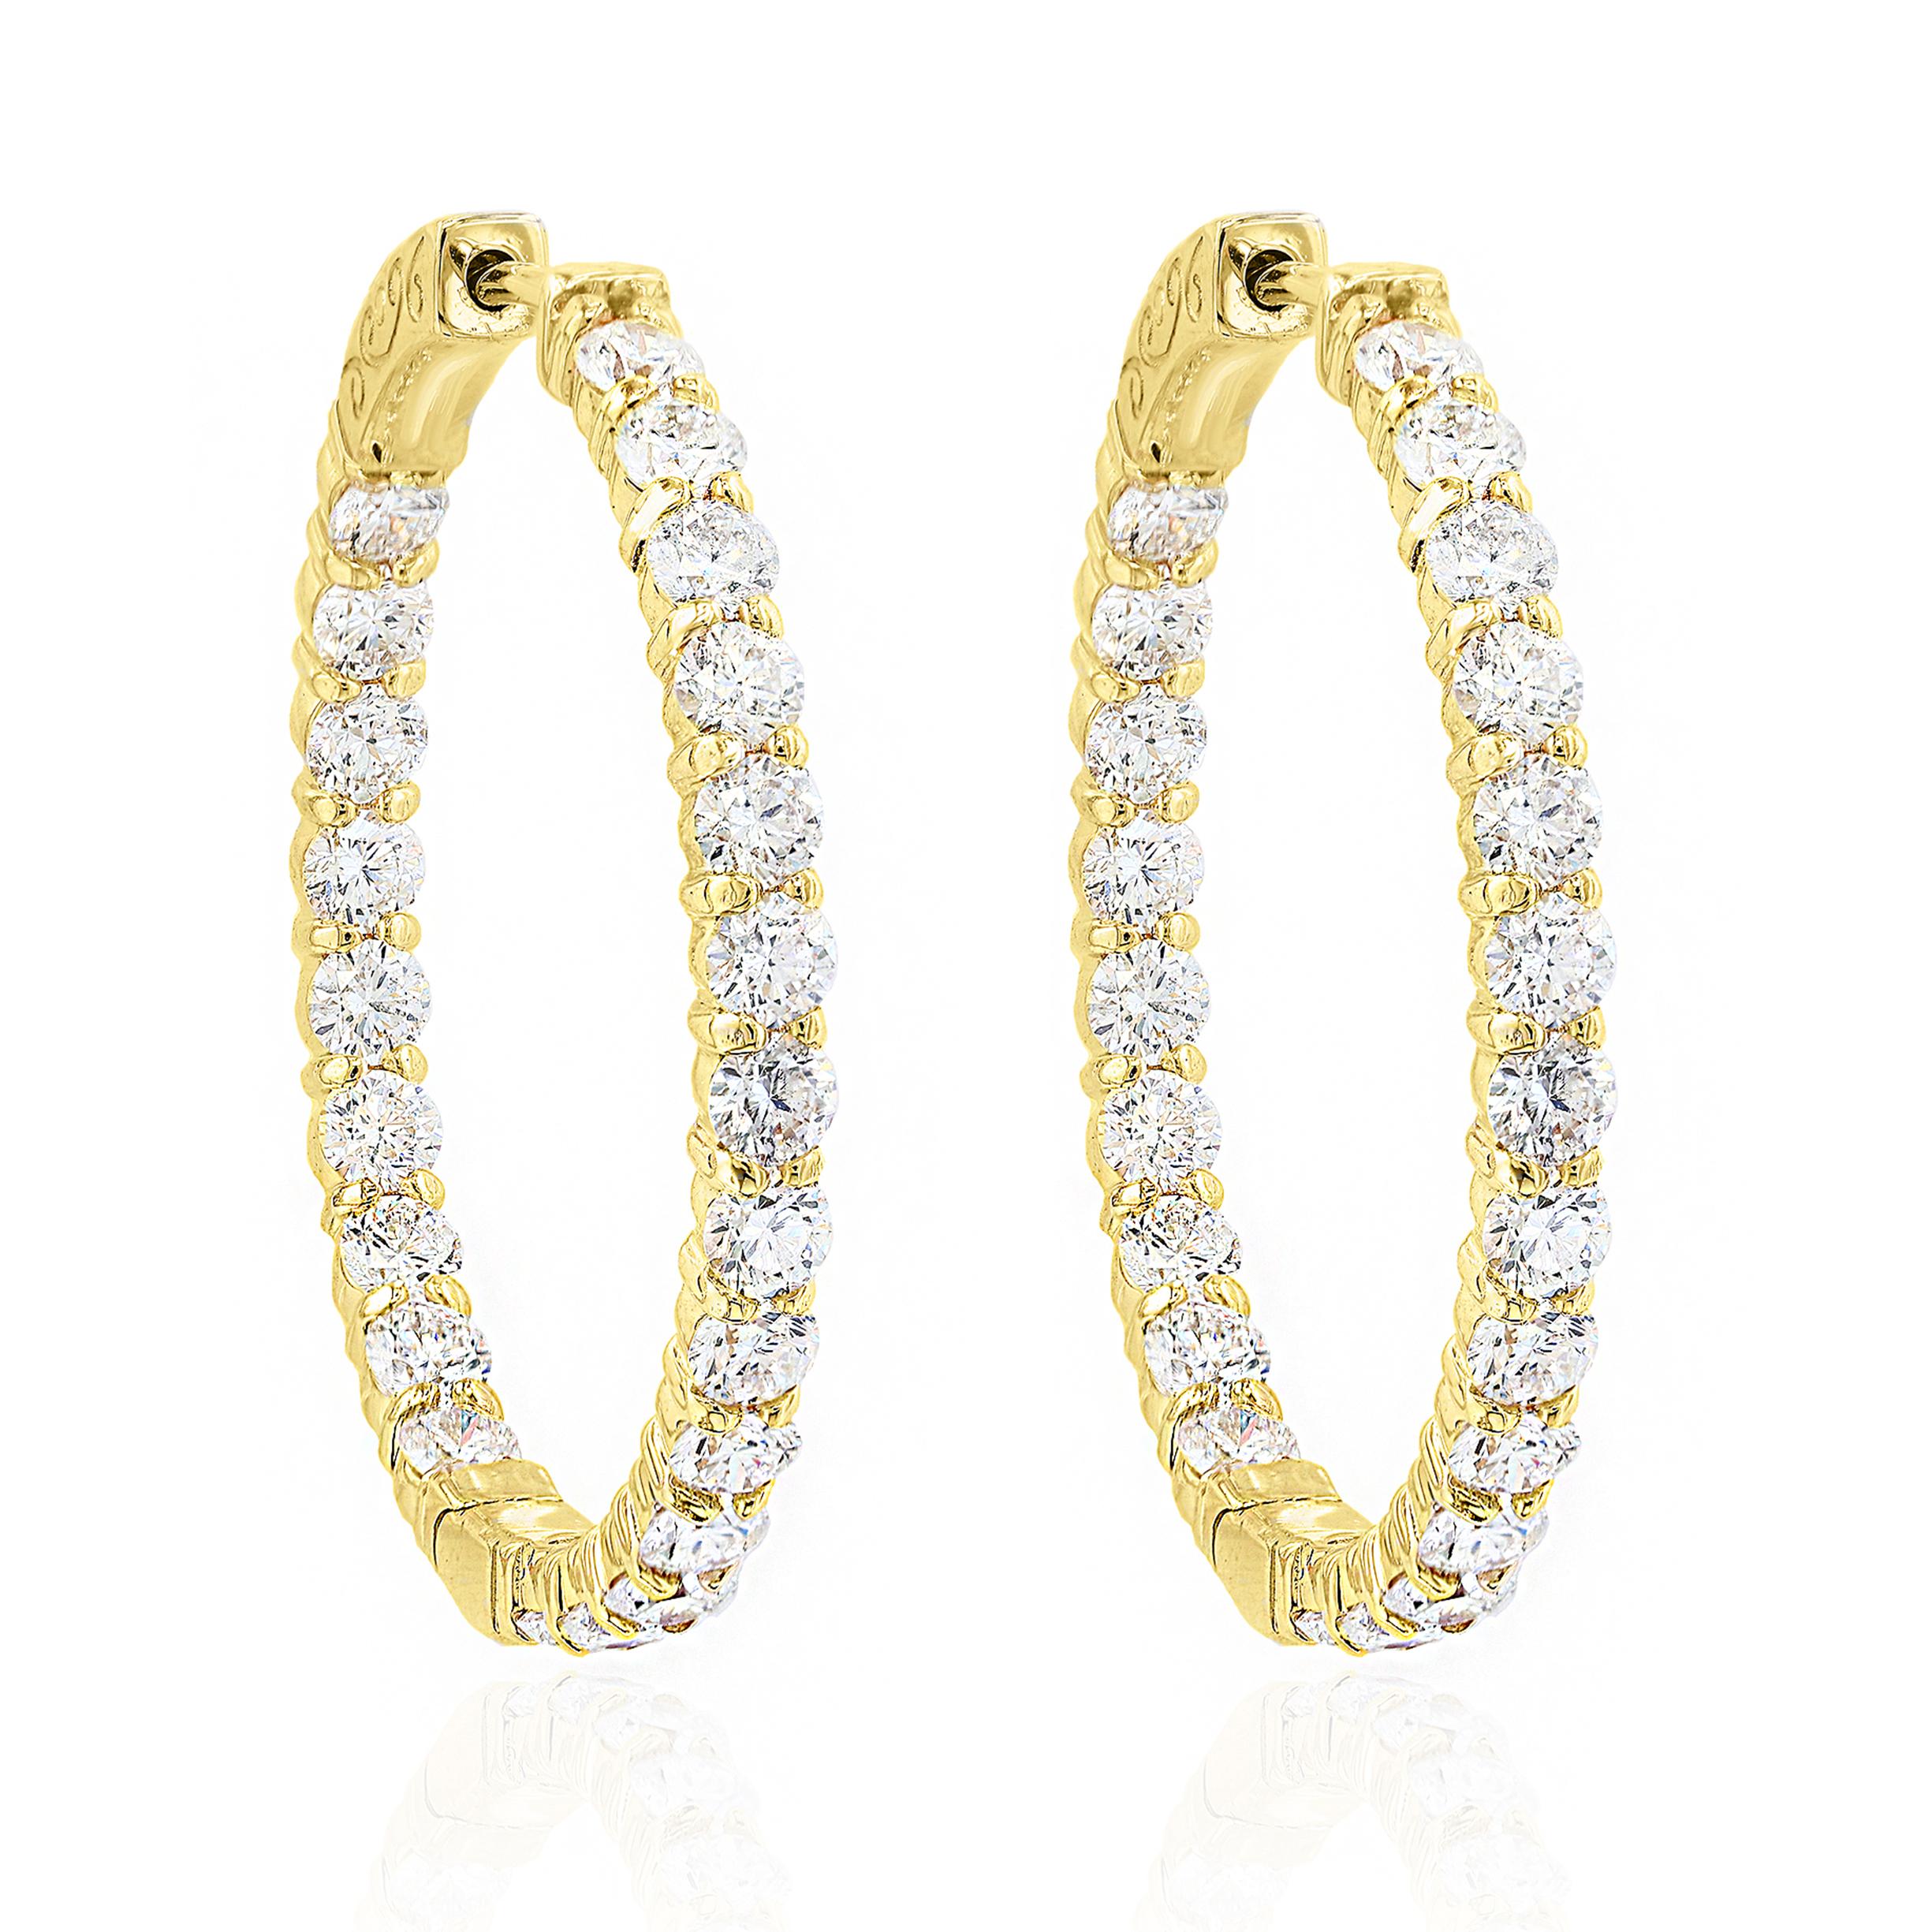 Modern 4.07 Carat Round Cut Diamond Hoop Earrings in 14K Yellow Gold For Sale